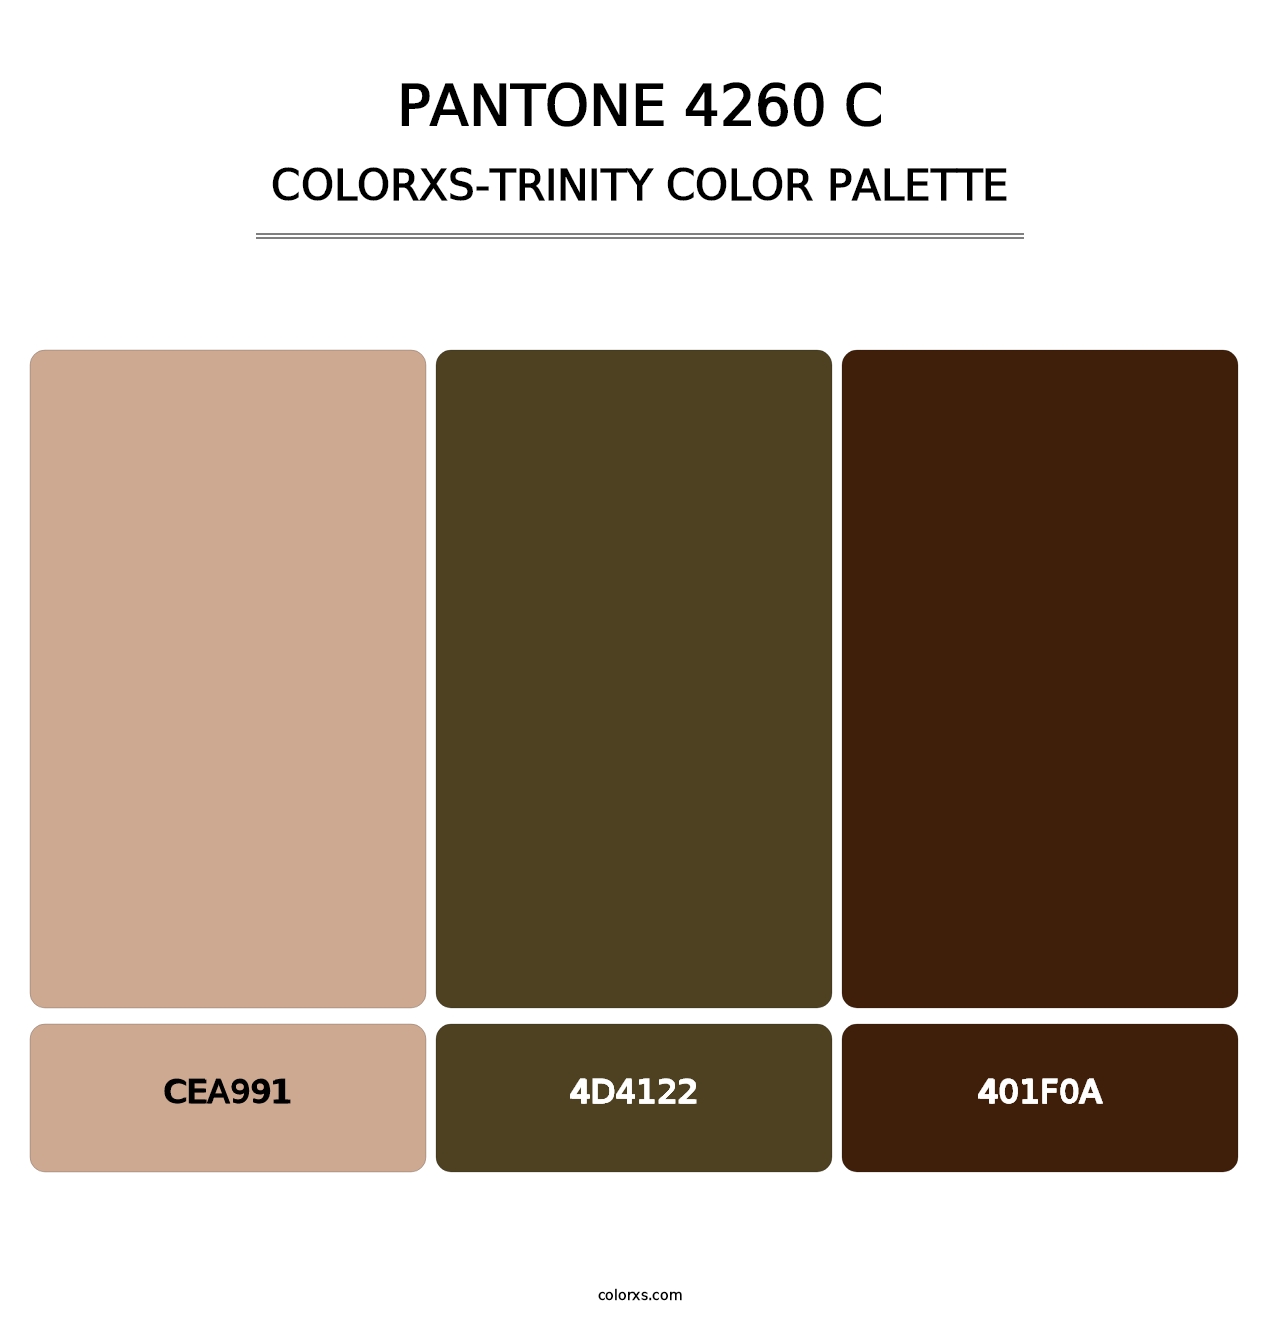 PANTONE 4260 C - Colorxs Trinity Palette